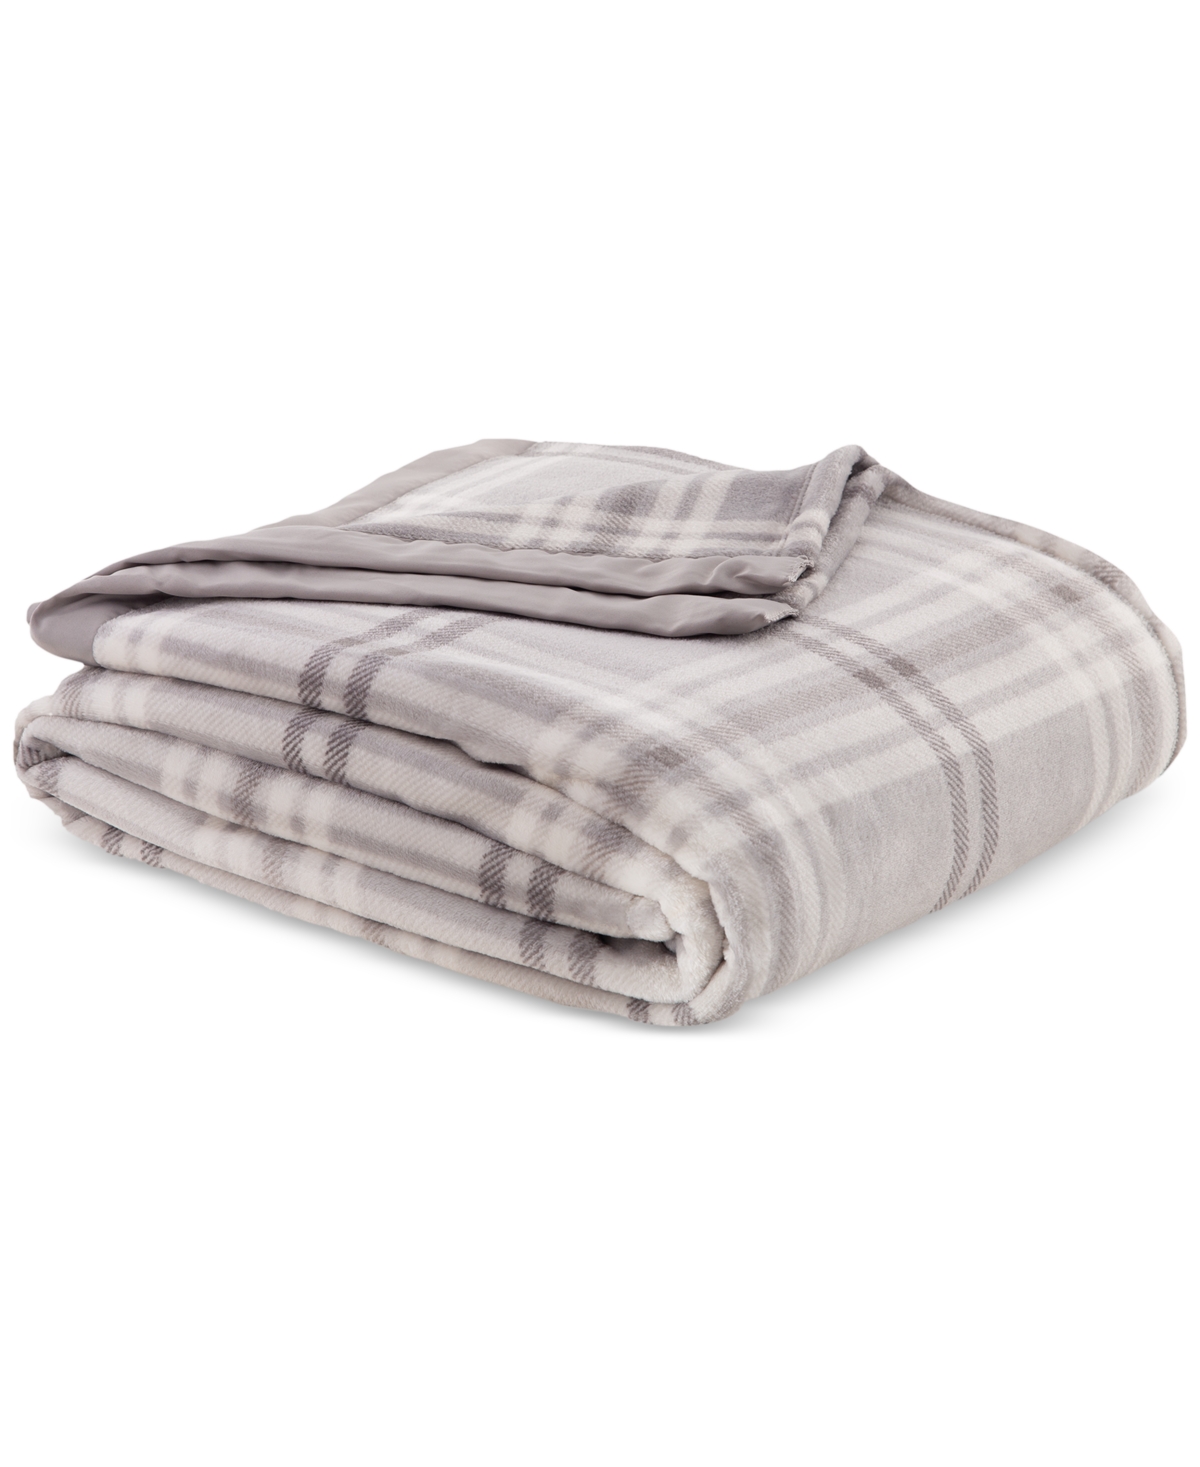 Berkshire Classic Velvety Plush Blanket, King, Created For Macy's In Grey Plaid